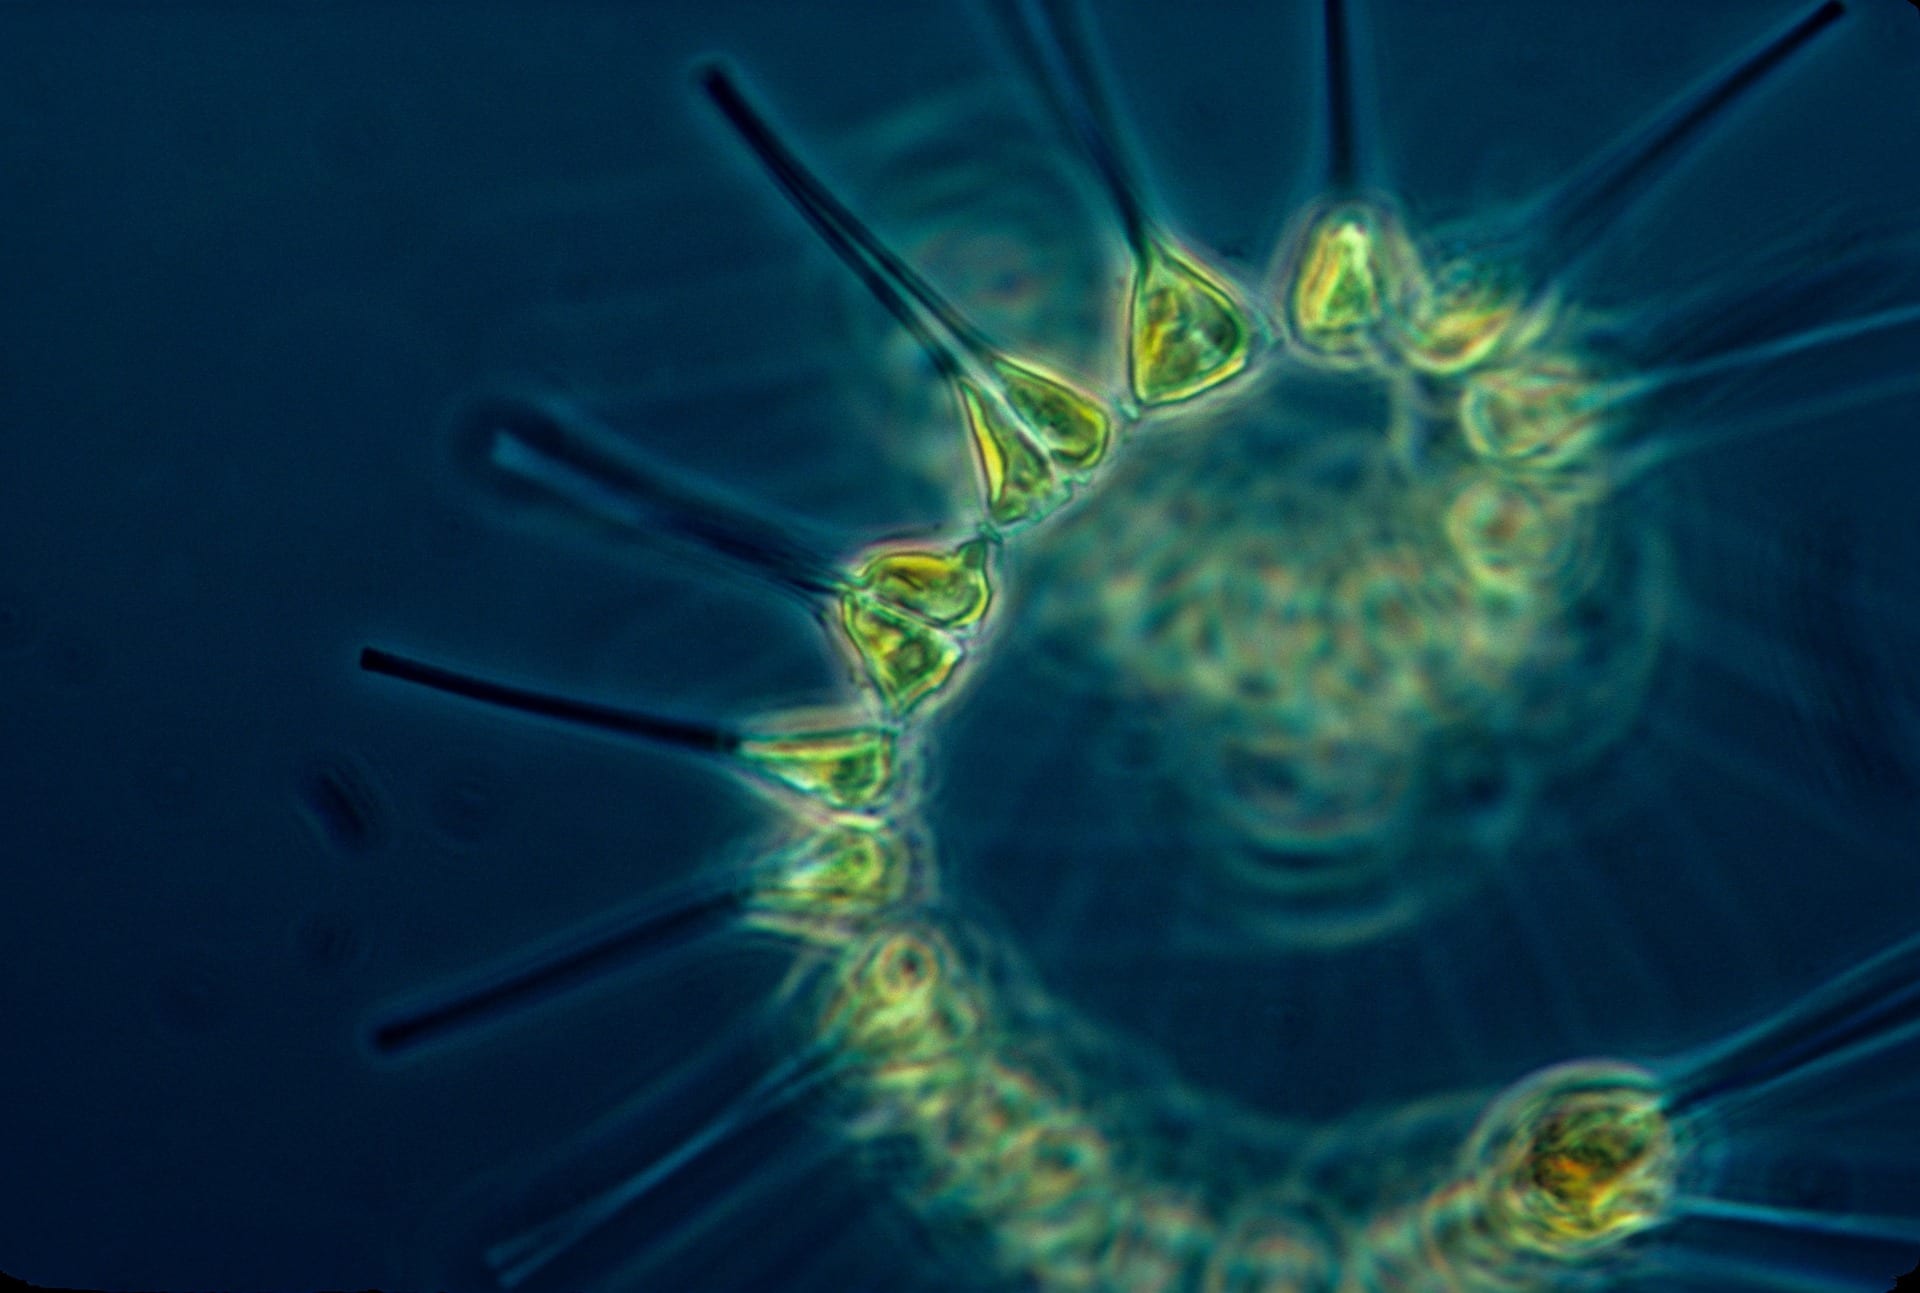 https://pixabay.com/en/phytoplankton-plankton-1348508/